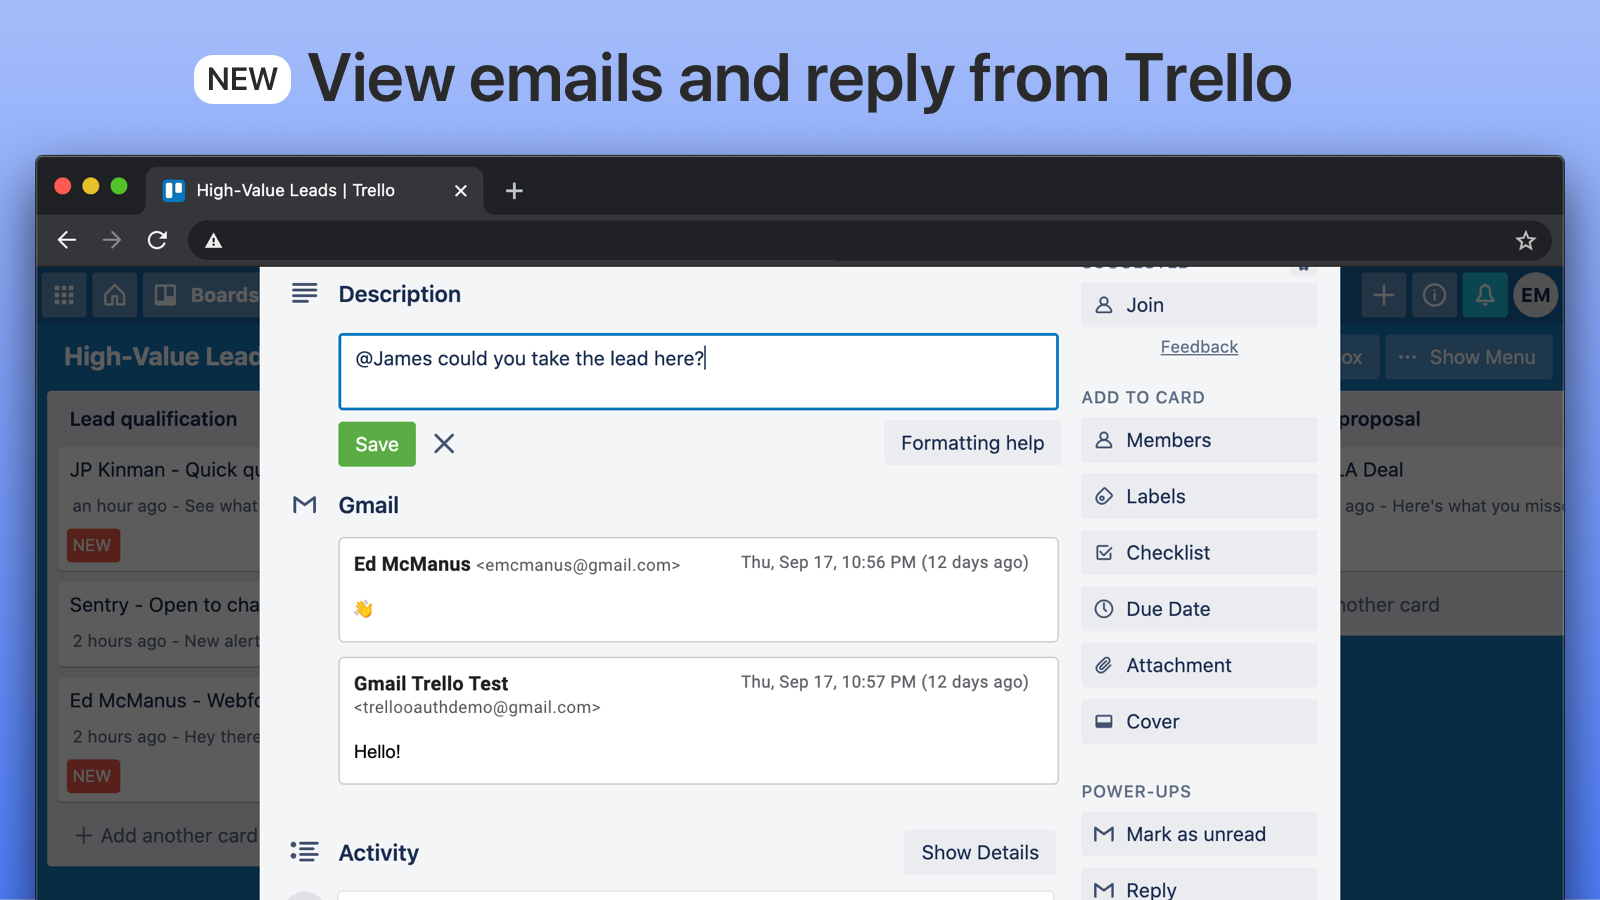 Trello PowerUp Gmail by Cardbox